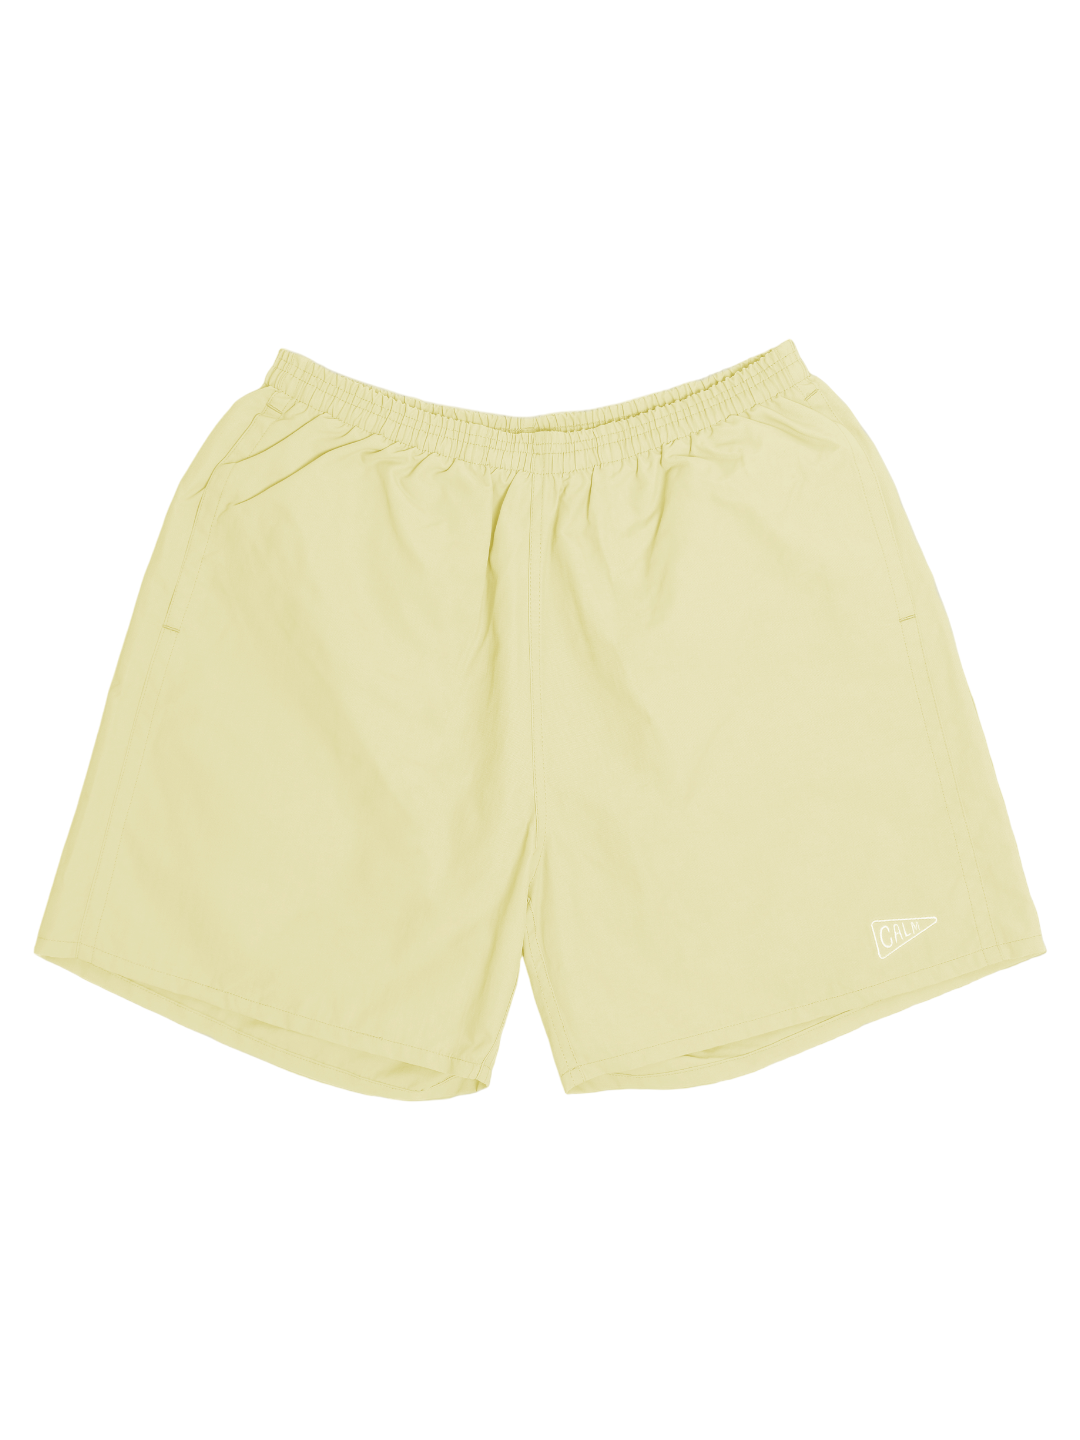 Calm outdoors Nylon Short Pants (Pastel Yellow)